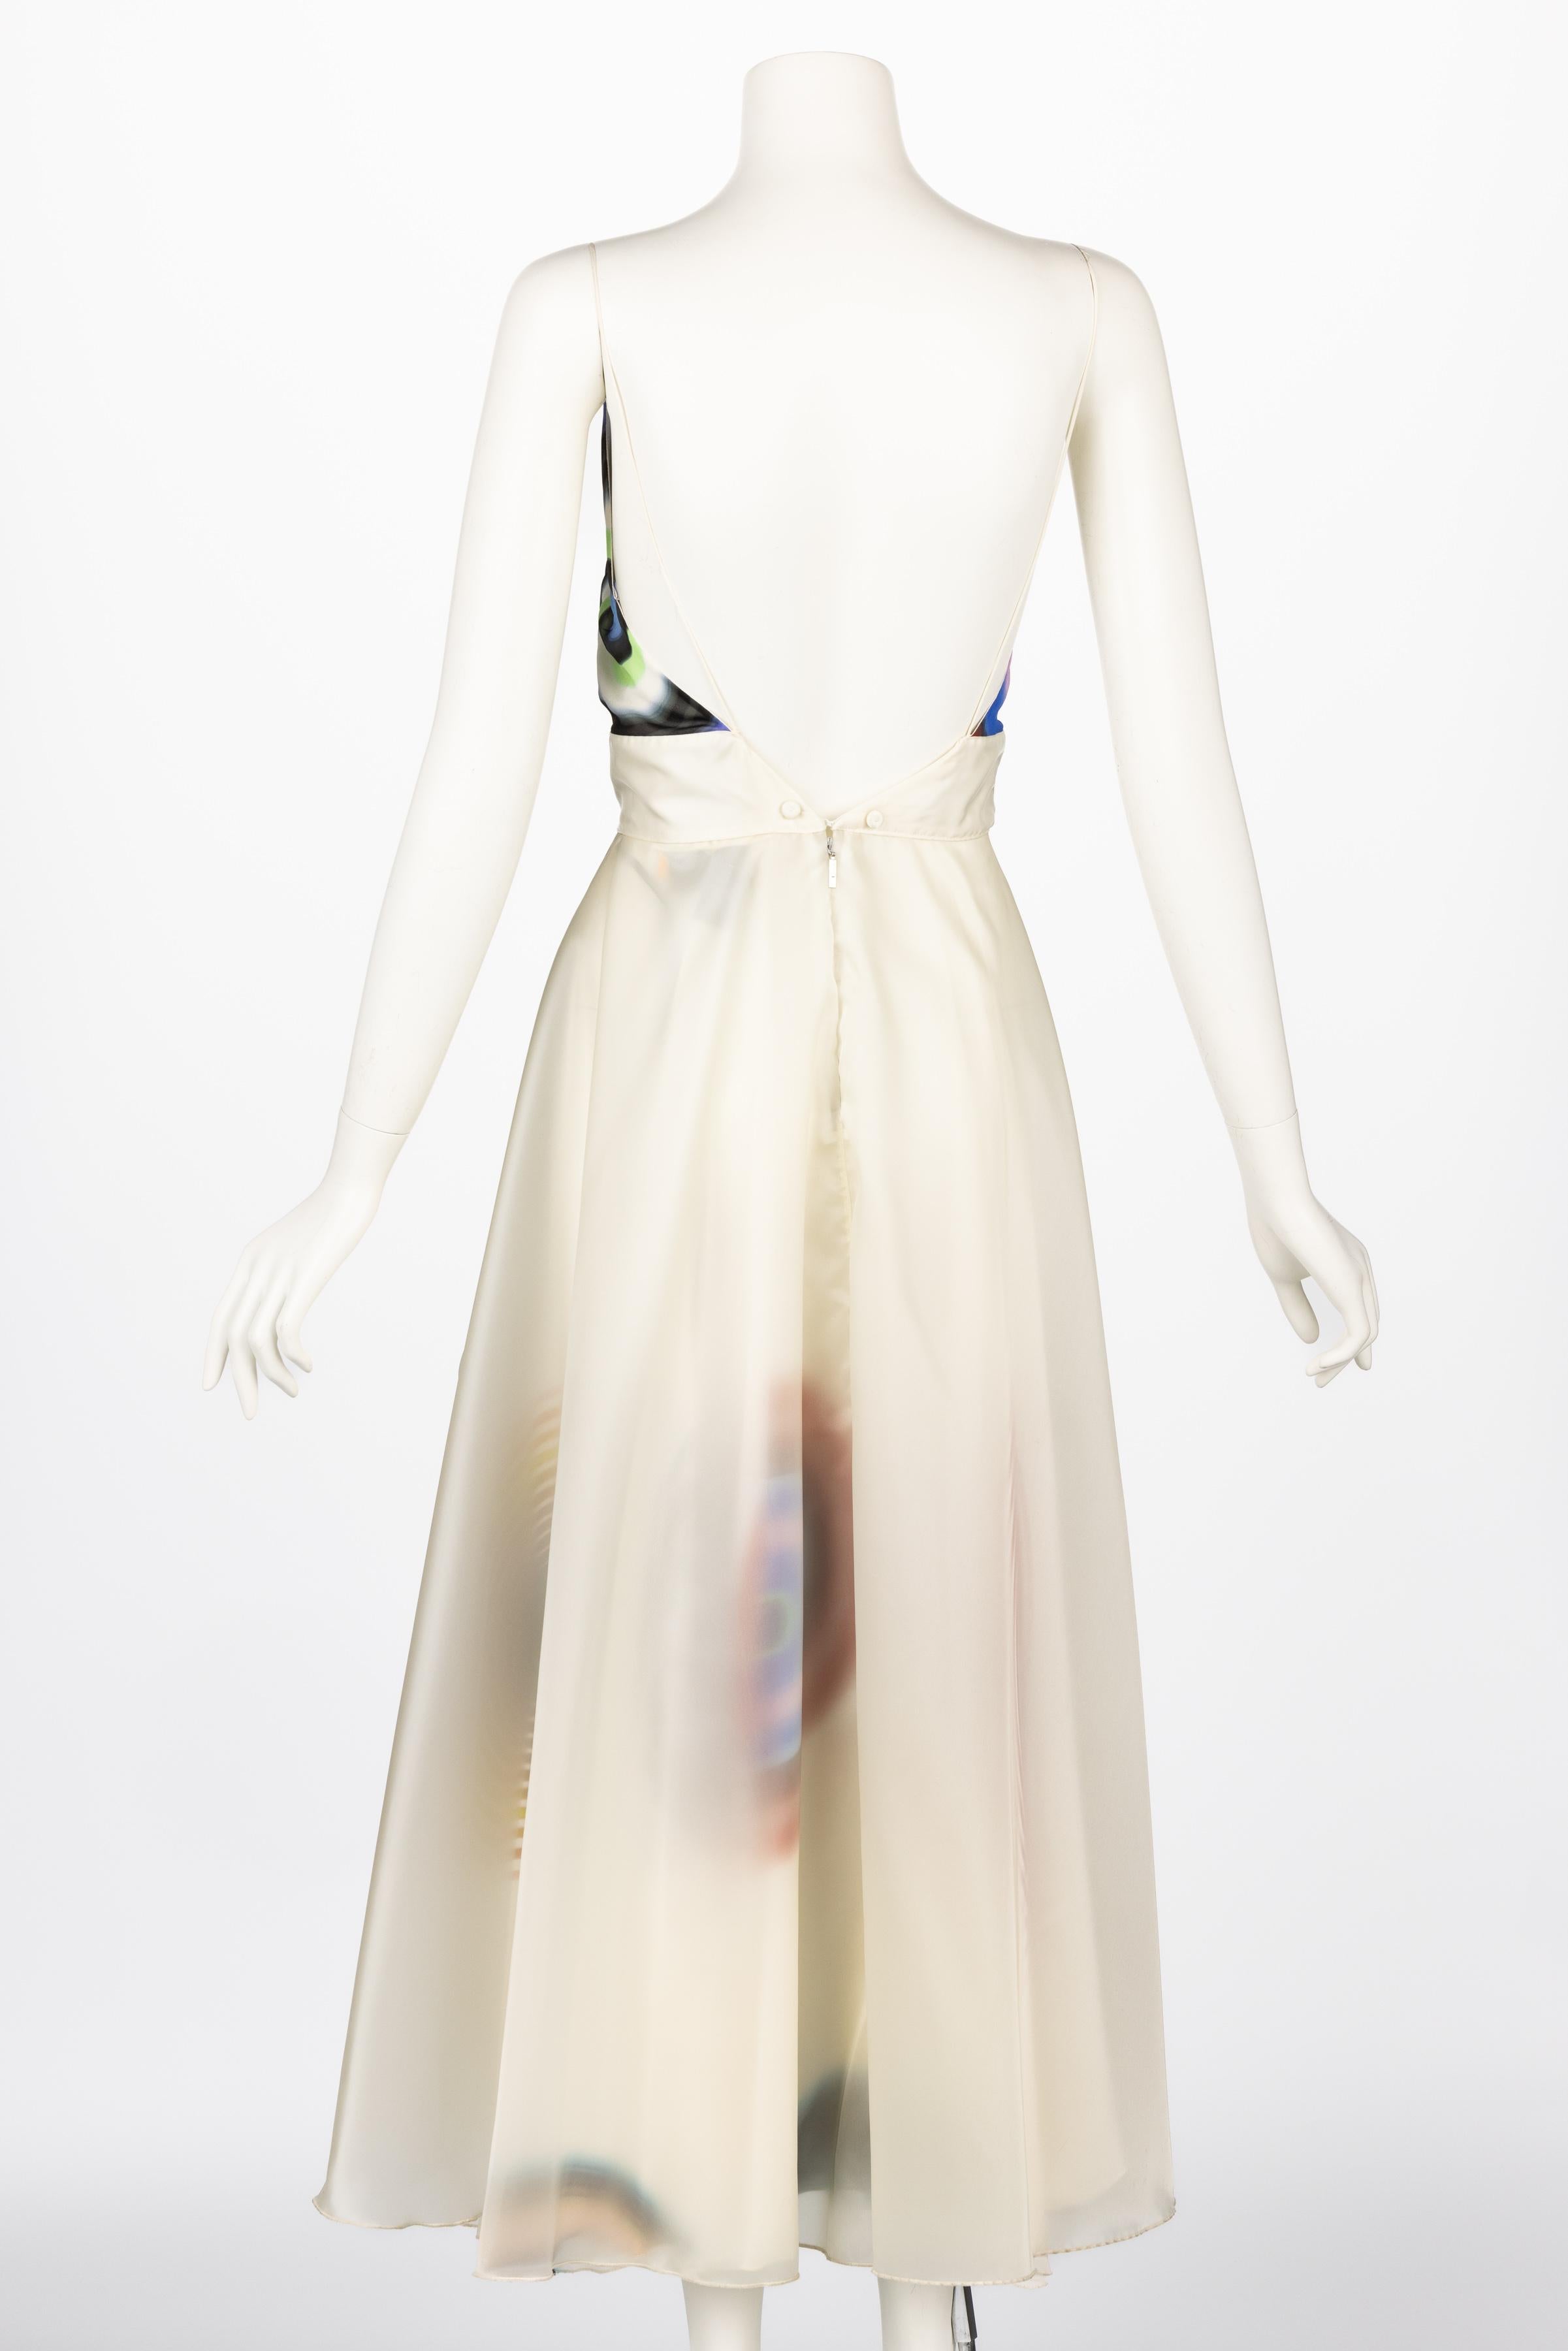 Fendi Karl Lagerfeld Silk Print Dress S/S 2008 Runway For Sale 1